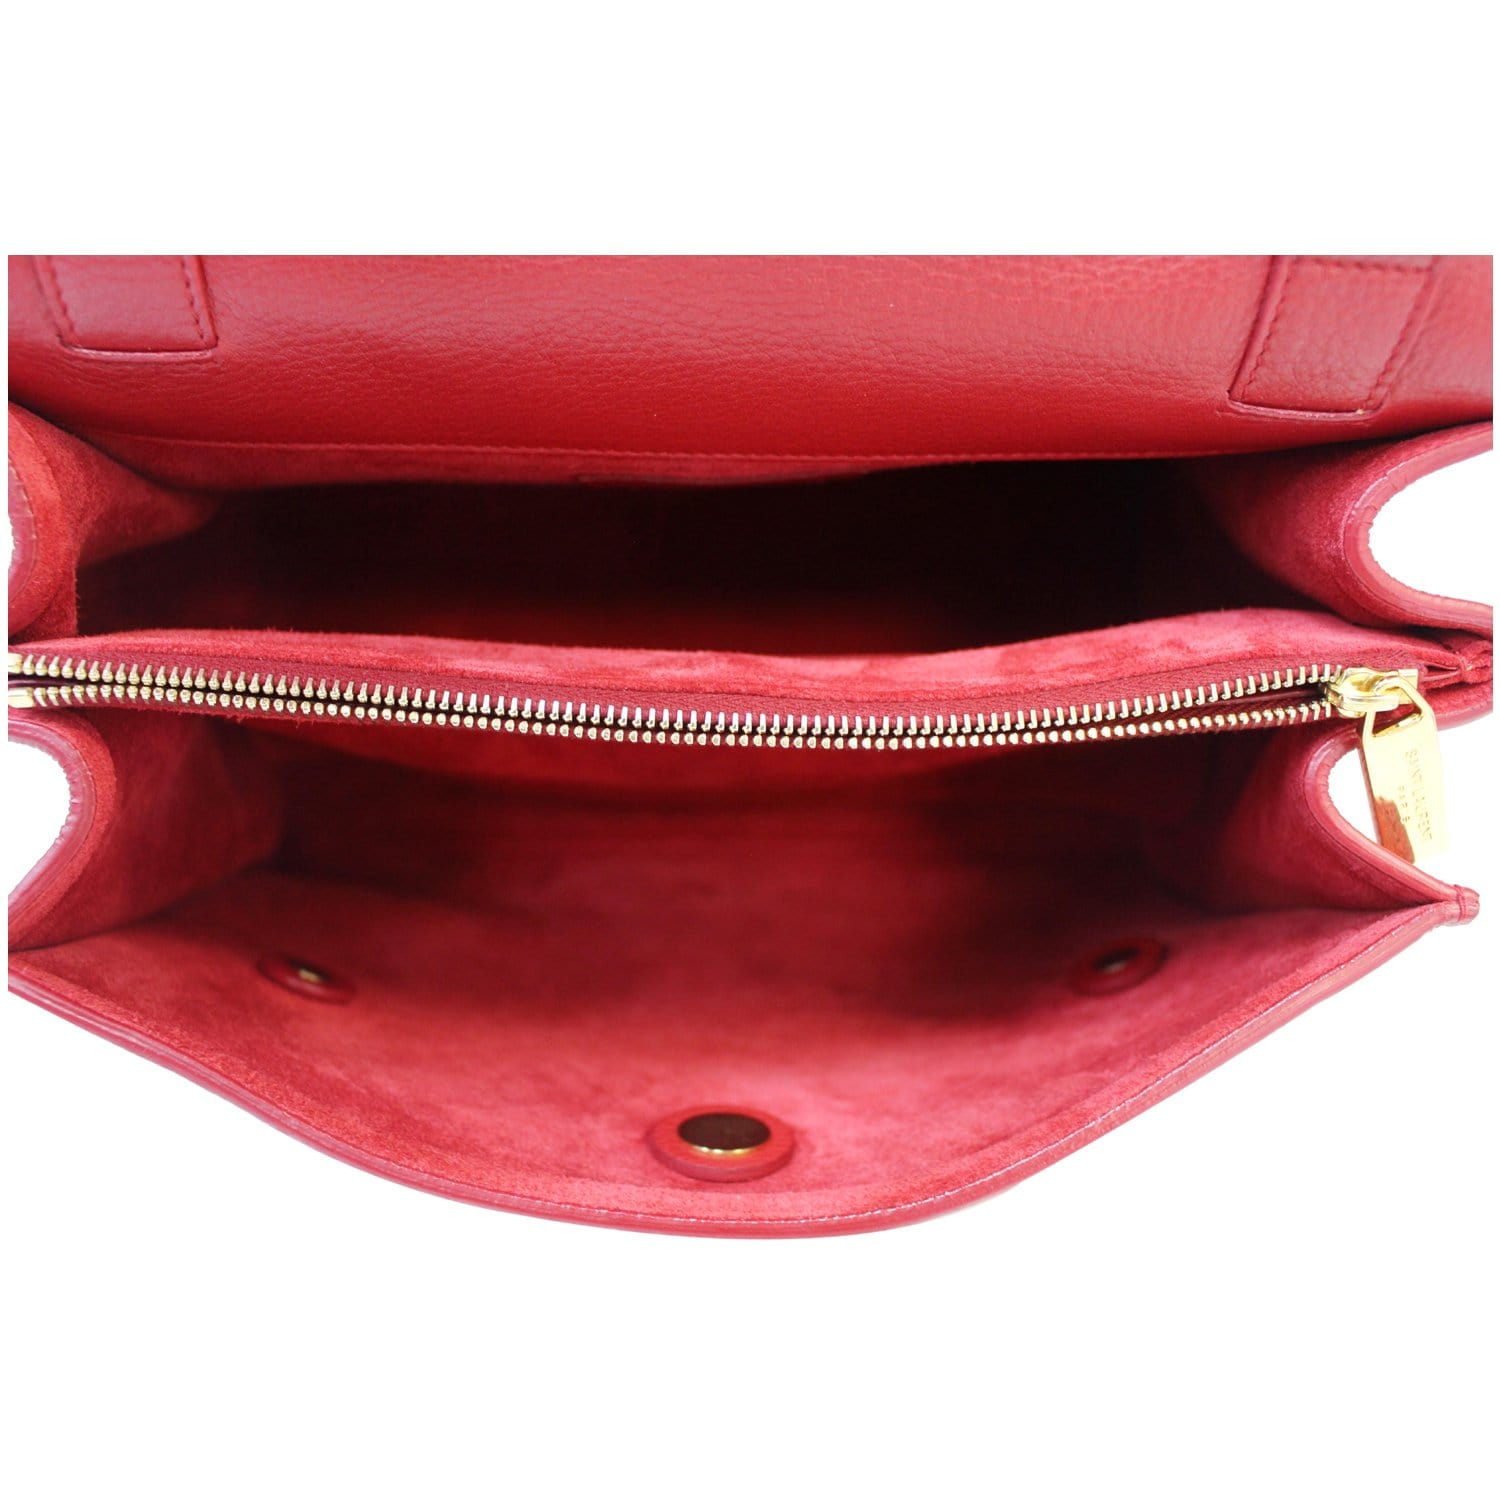 YVES SAINT LAURENT Muse Two Medium Calfskin Satchel Shoulder Bag Red